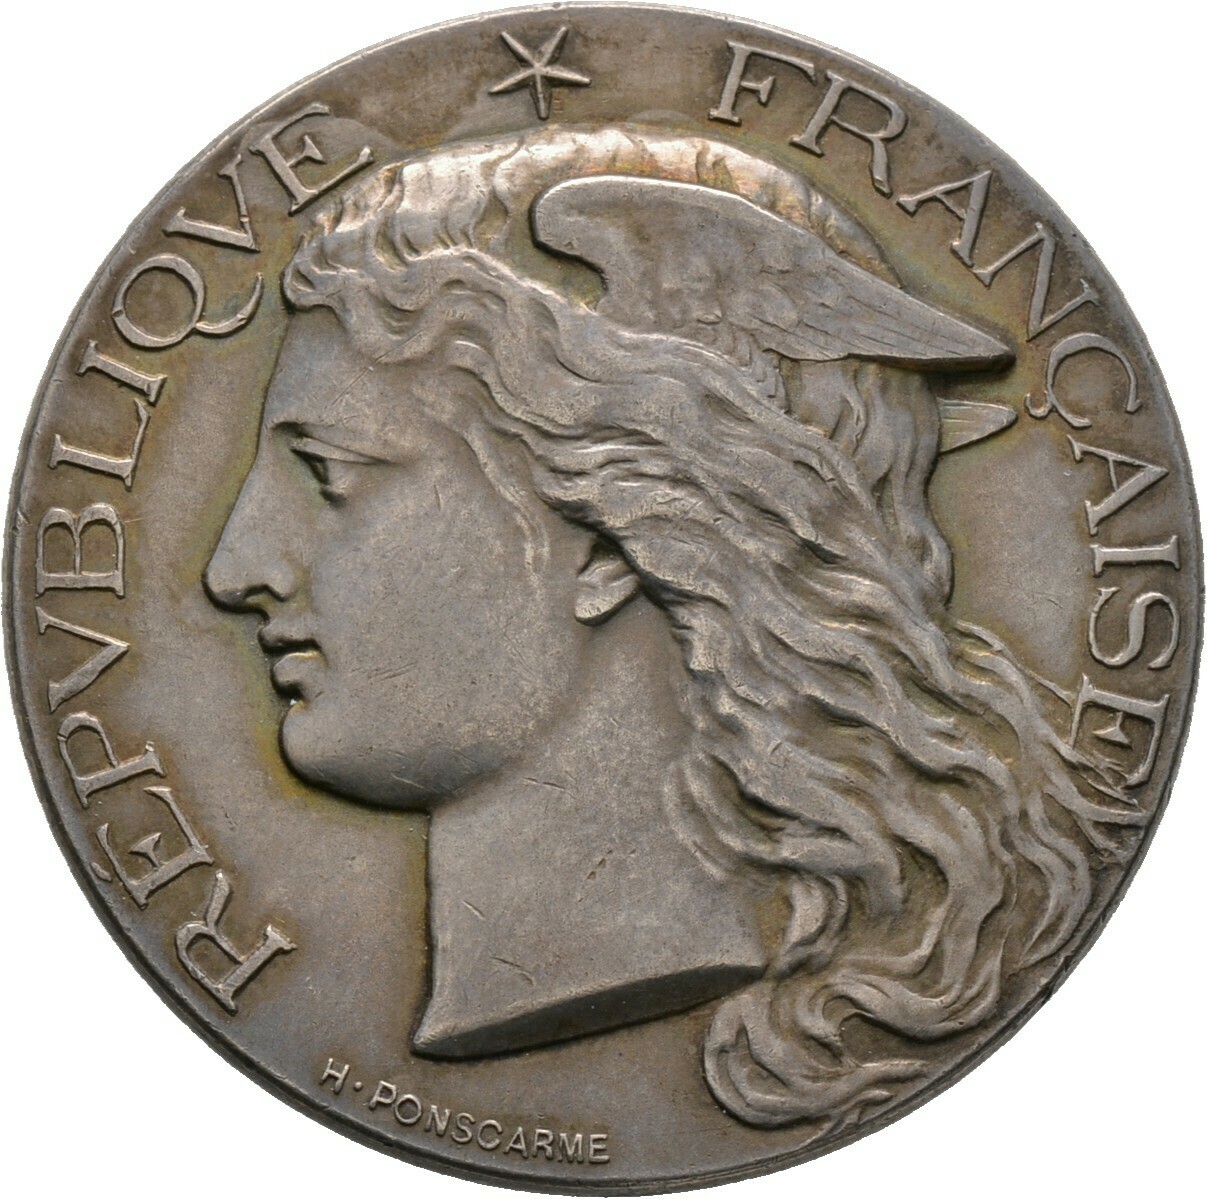 Mattierte, silberne Prämienmedaille 1896, 3. Republik, Frankreich